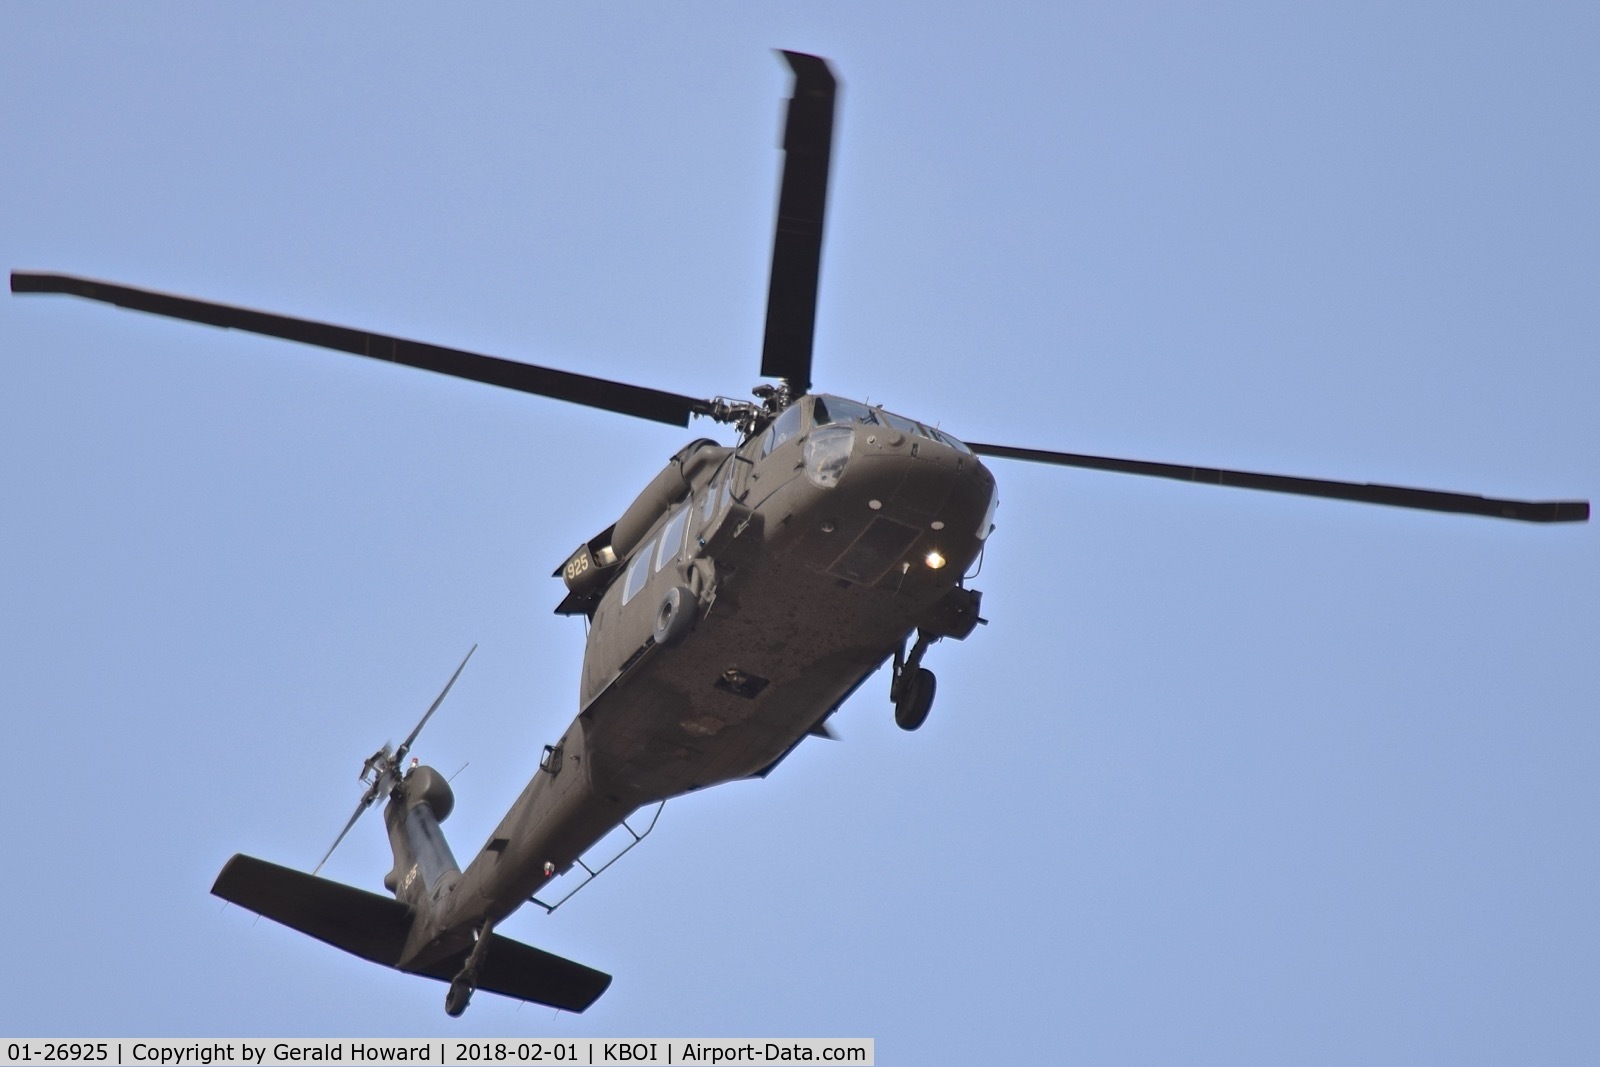 01-26925, 2001 Sikorsky UH-60L Black Hawk C/N inknown, 1-183rd AVN BN, Idaho Army National Guard.